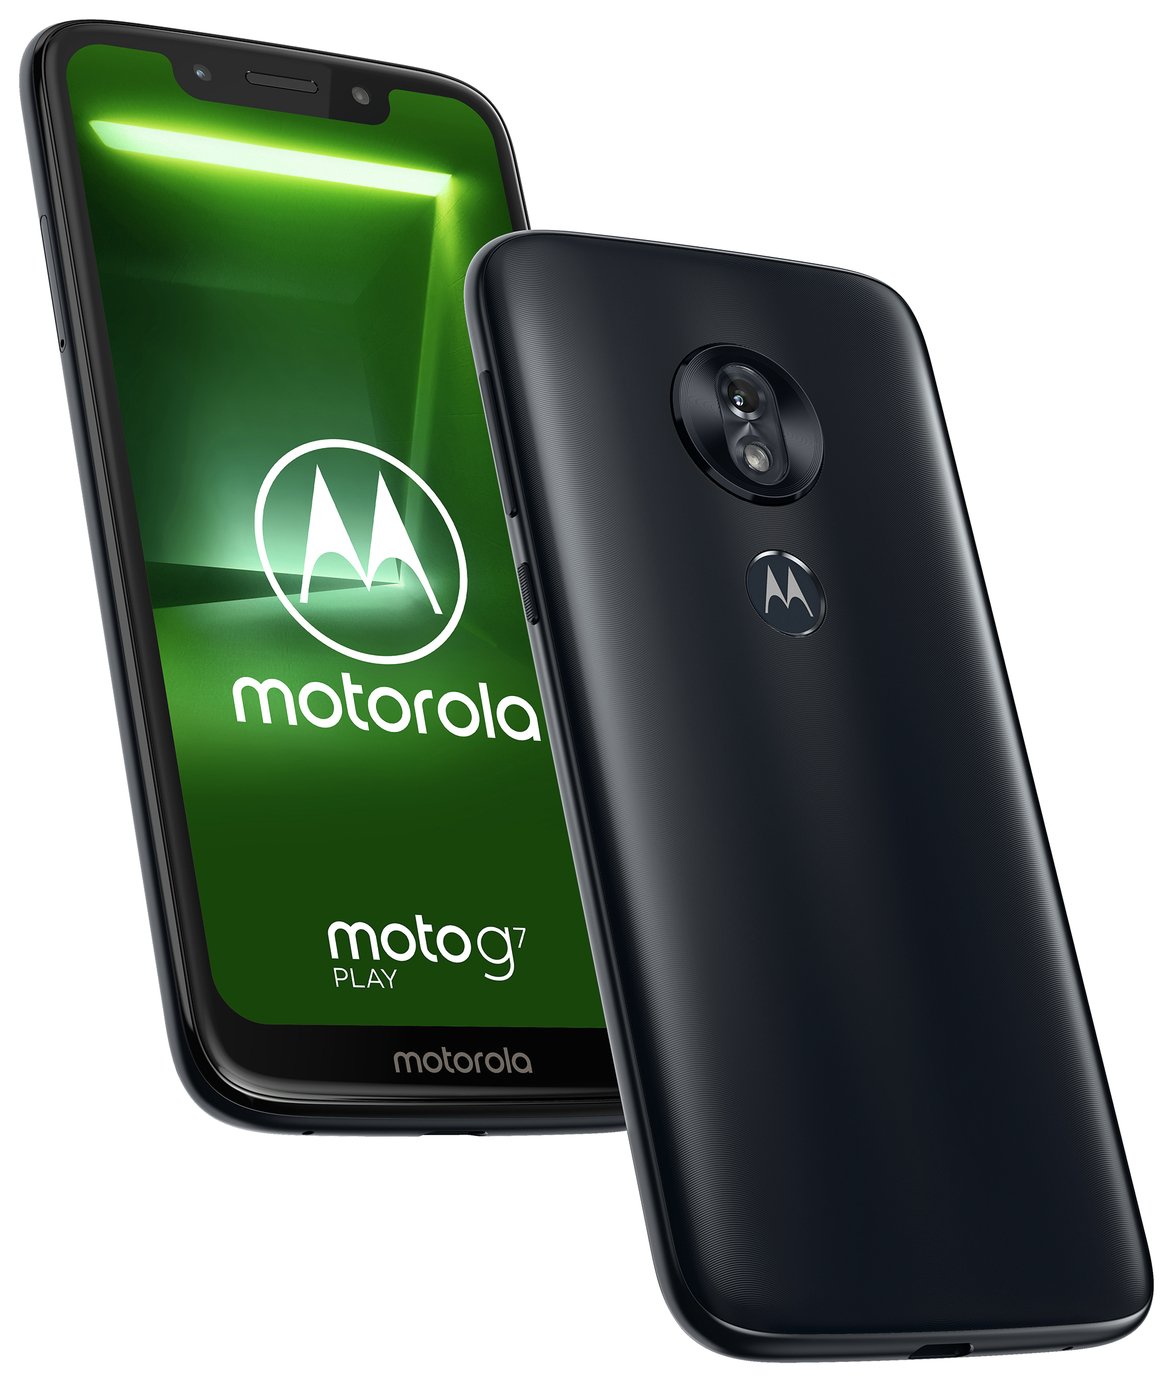 SIM Free Motorola G7 Play 32GB Mobile Phone - Indigo